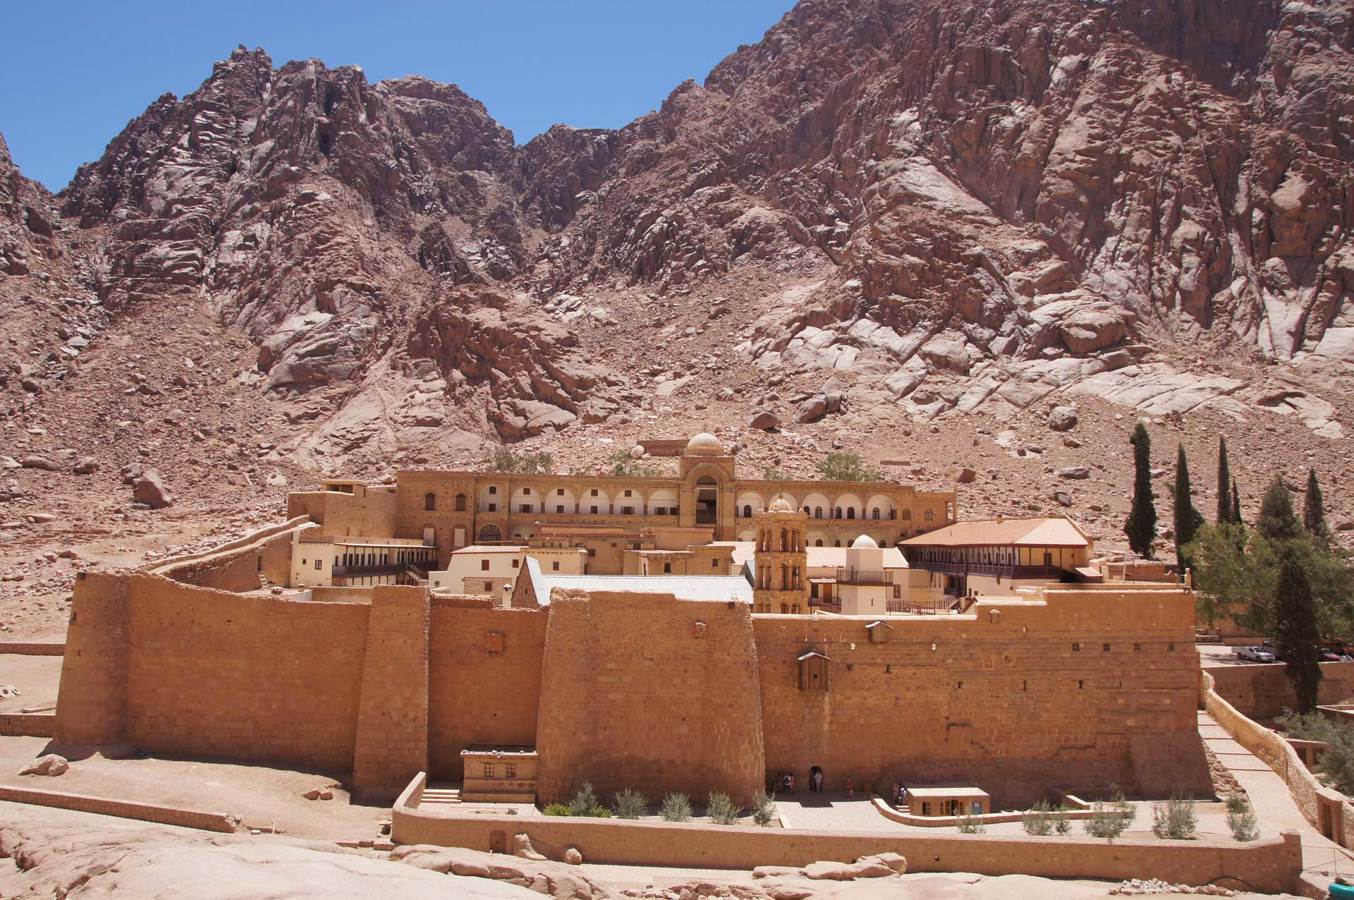 Sharm El Sheikh. St. Catherine's monastery.